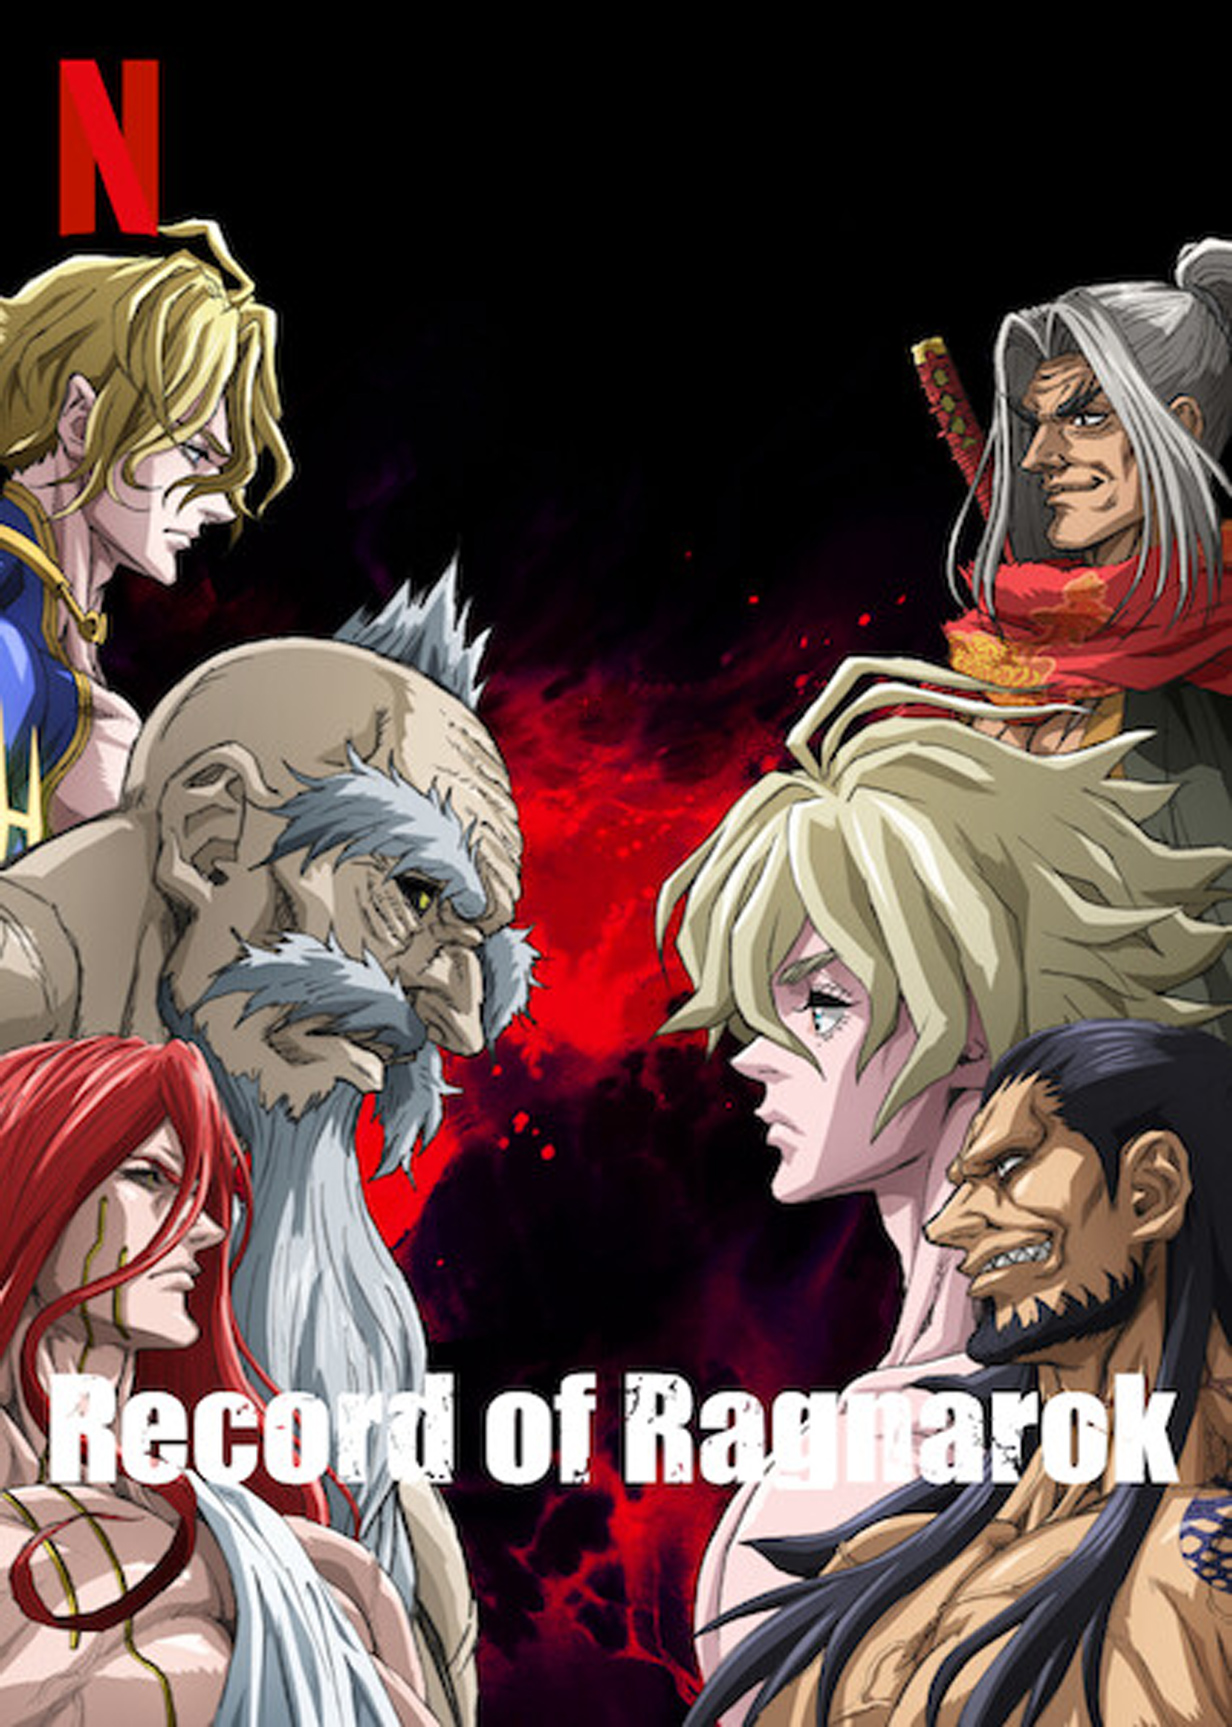 Netflix Anime 'Record of Ragnarok' Season 1 Coming to Netflix in